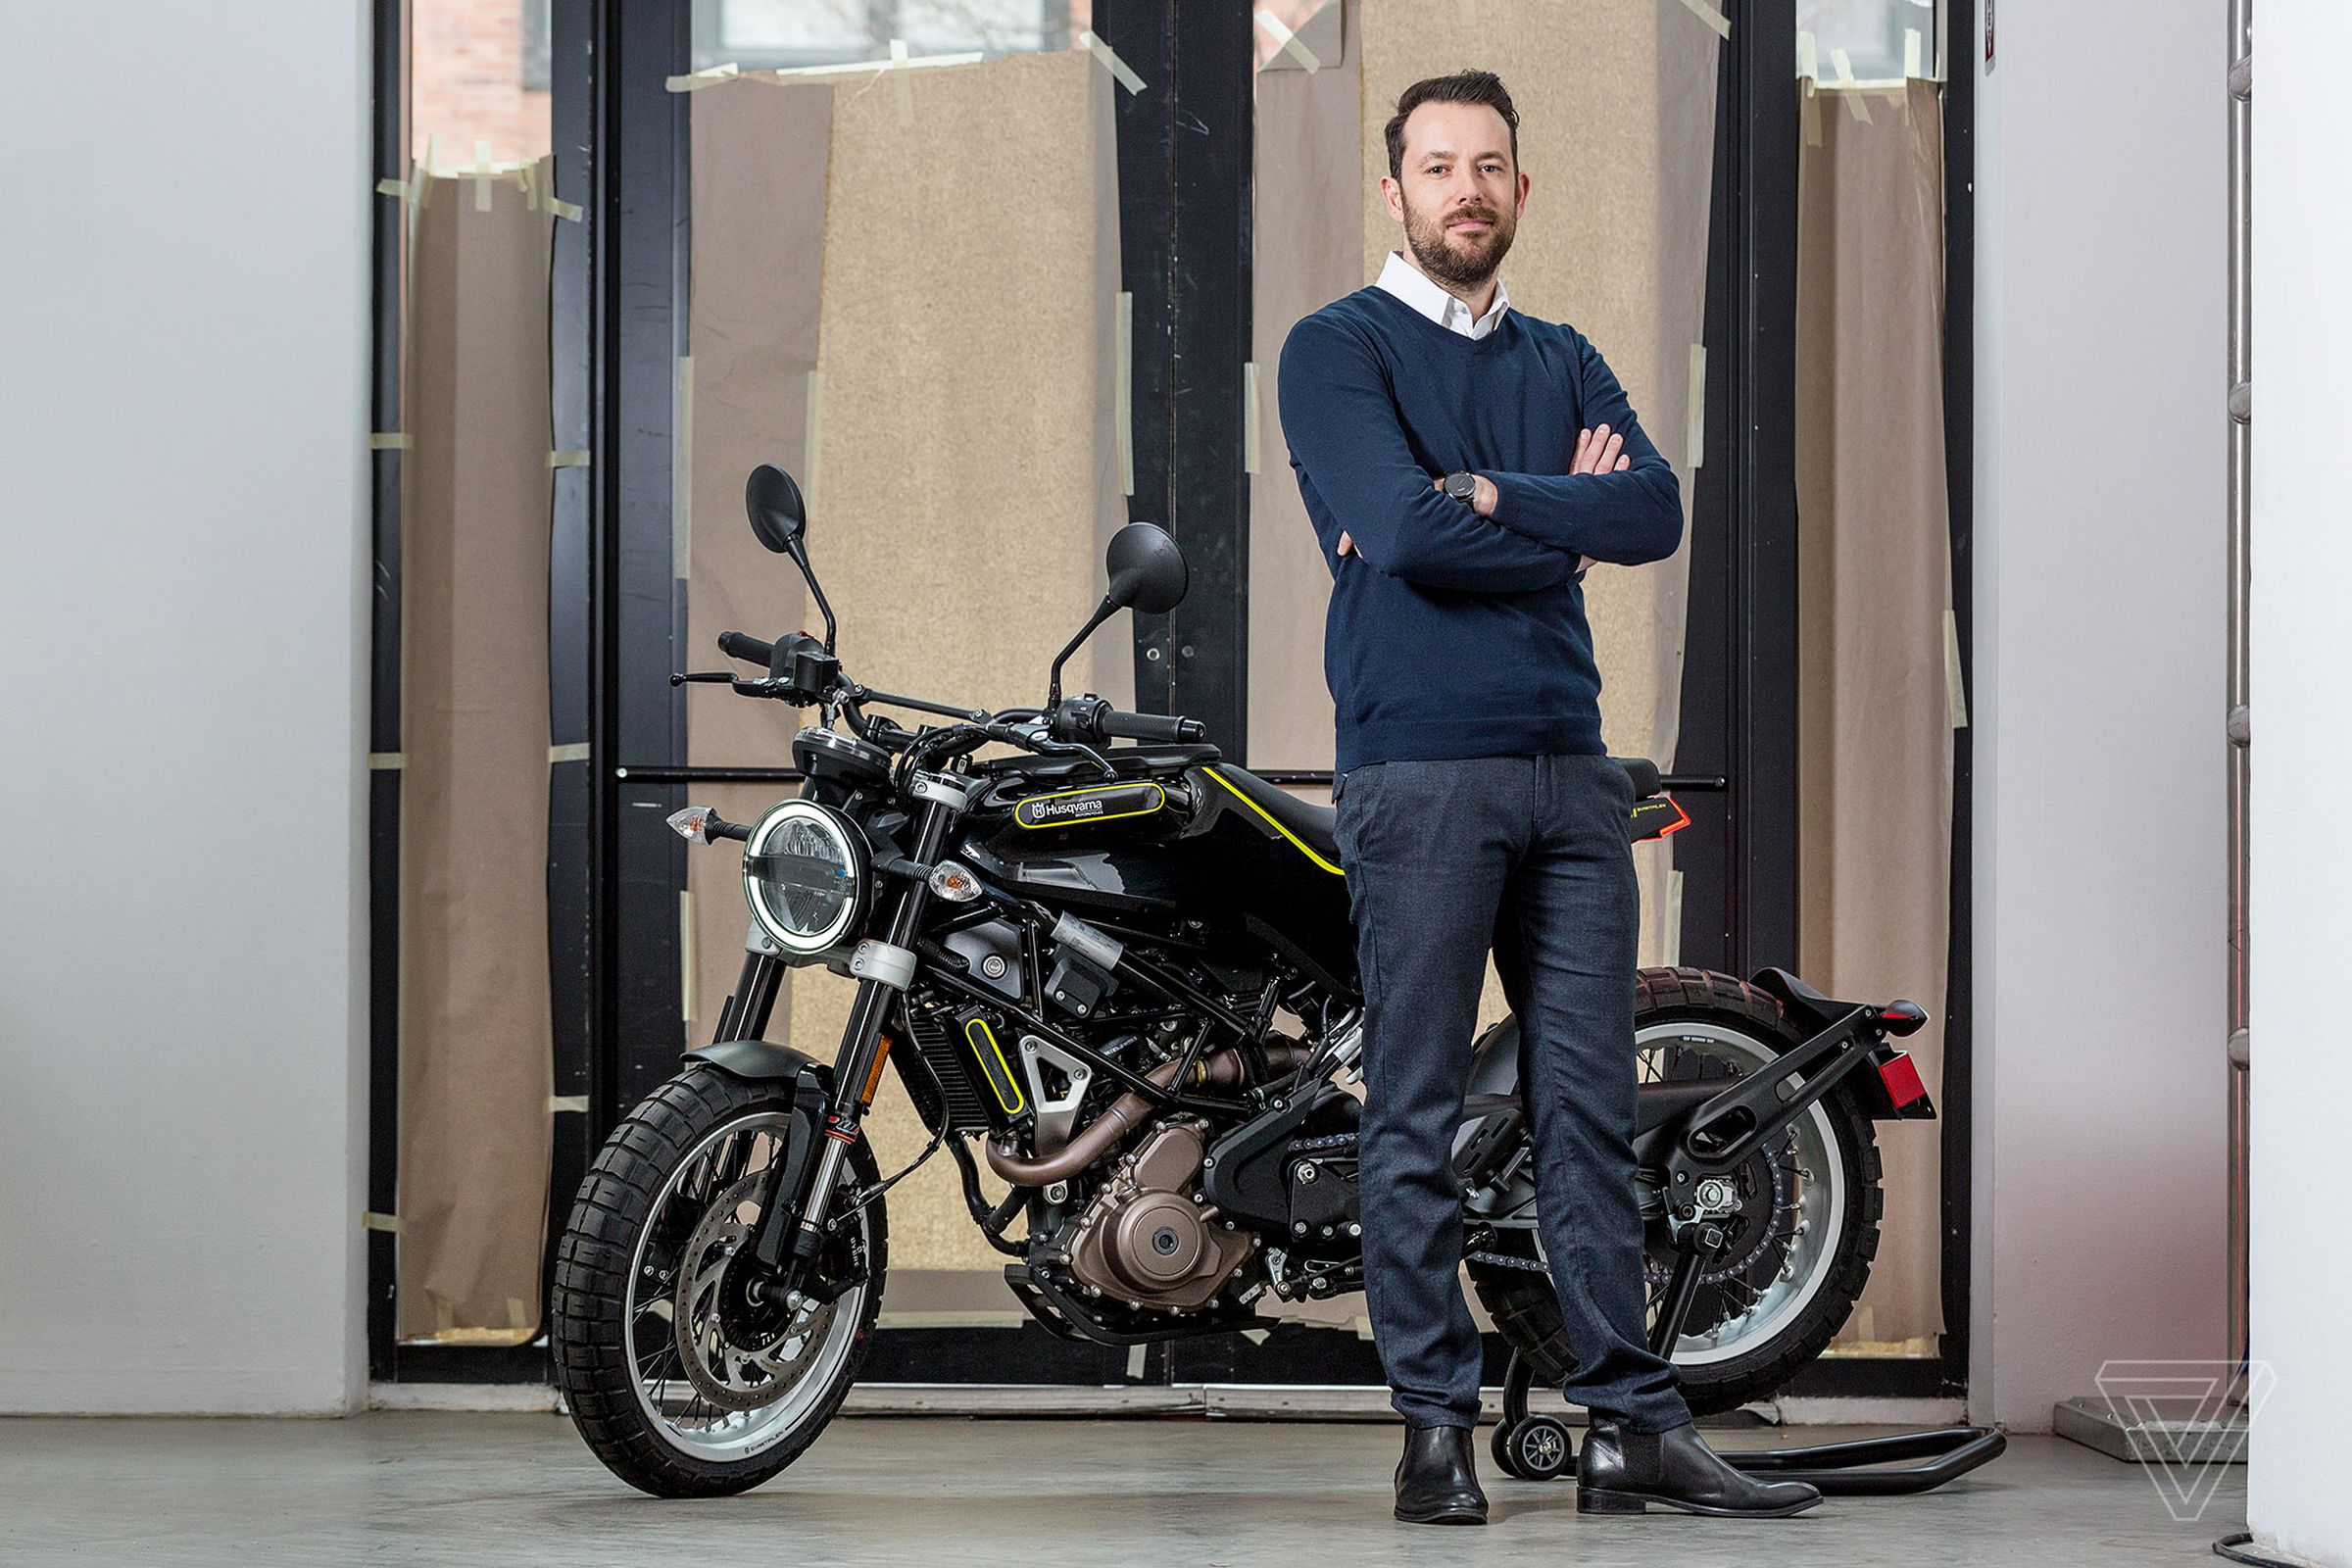 Designer Maxime Thouvenin with the new Husqvarna Svartpilen 401 street bike